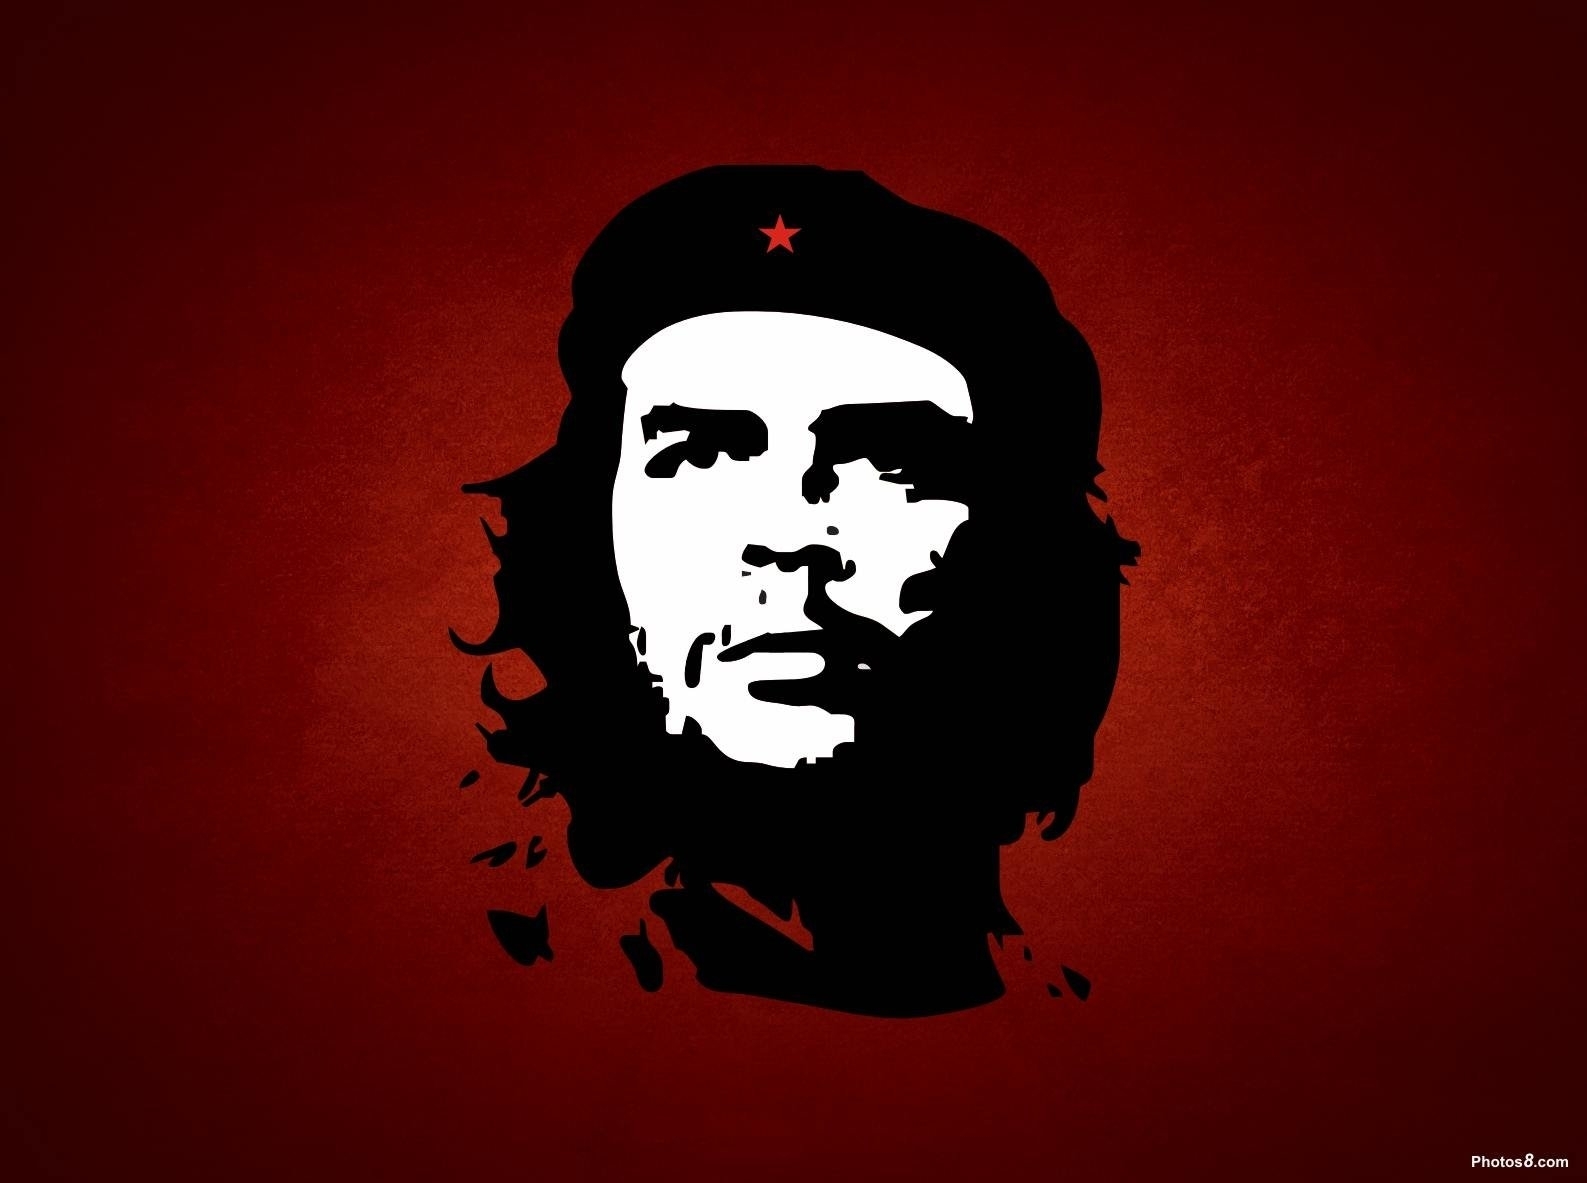 10 New Che Guevara Wallpaper Hd FULL HD 1920×1080 For PC Desktop 2020